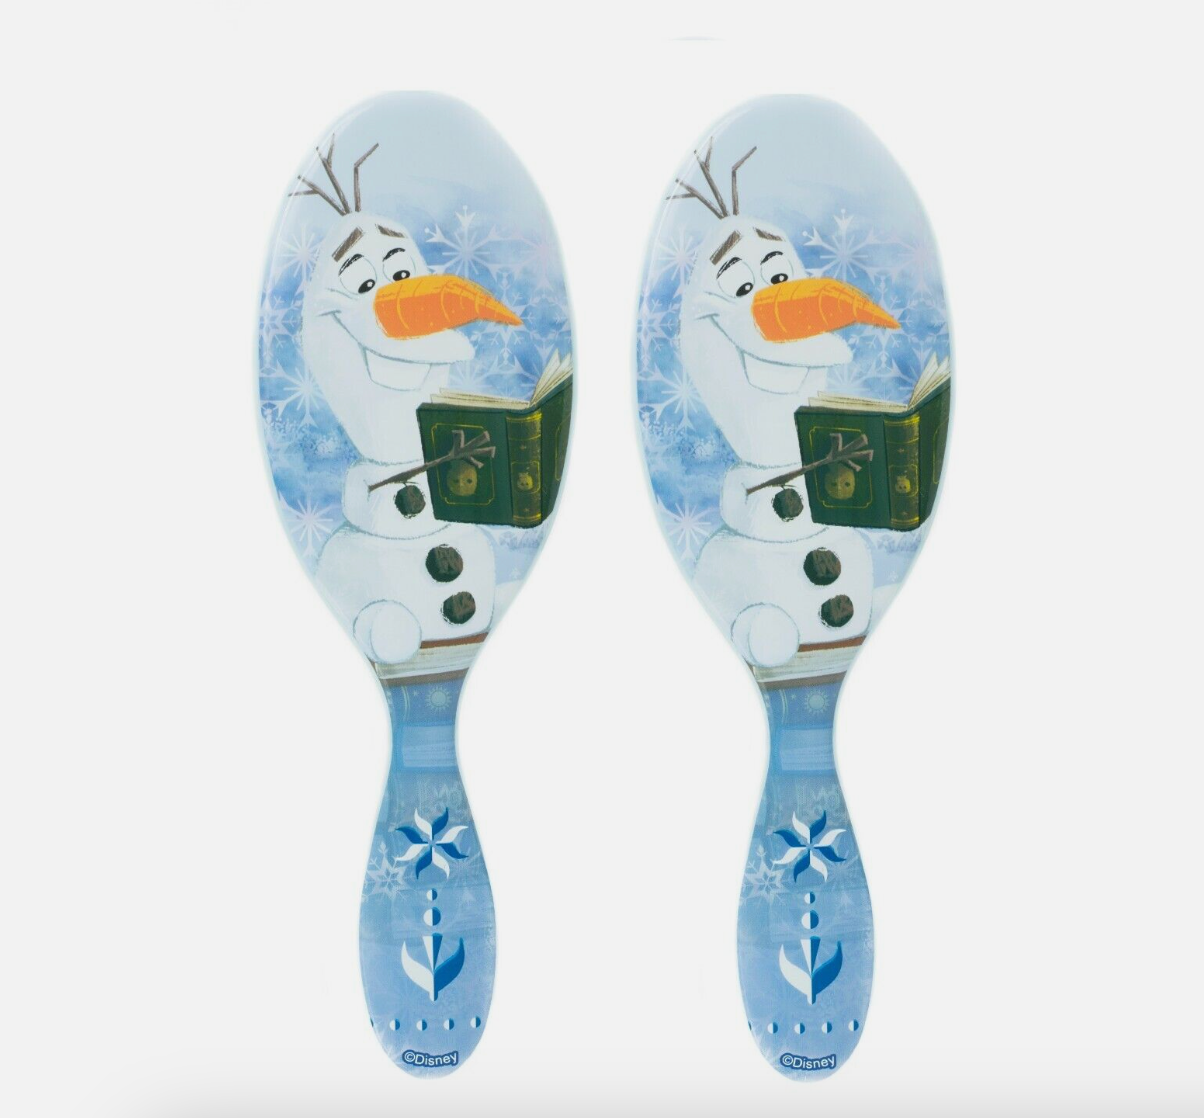 Disney Frozen Olaf 迪士尼雪寶限量乾濕兩用鬆軟梳 Olaf